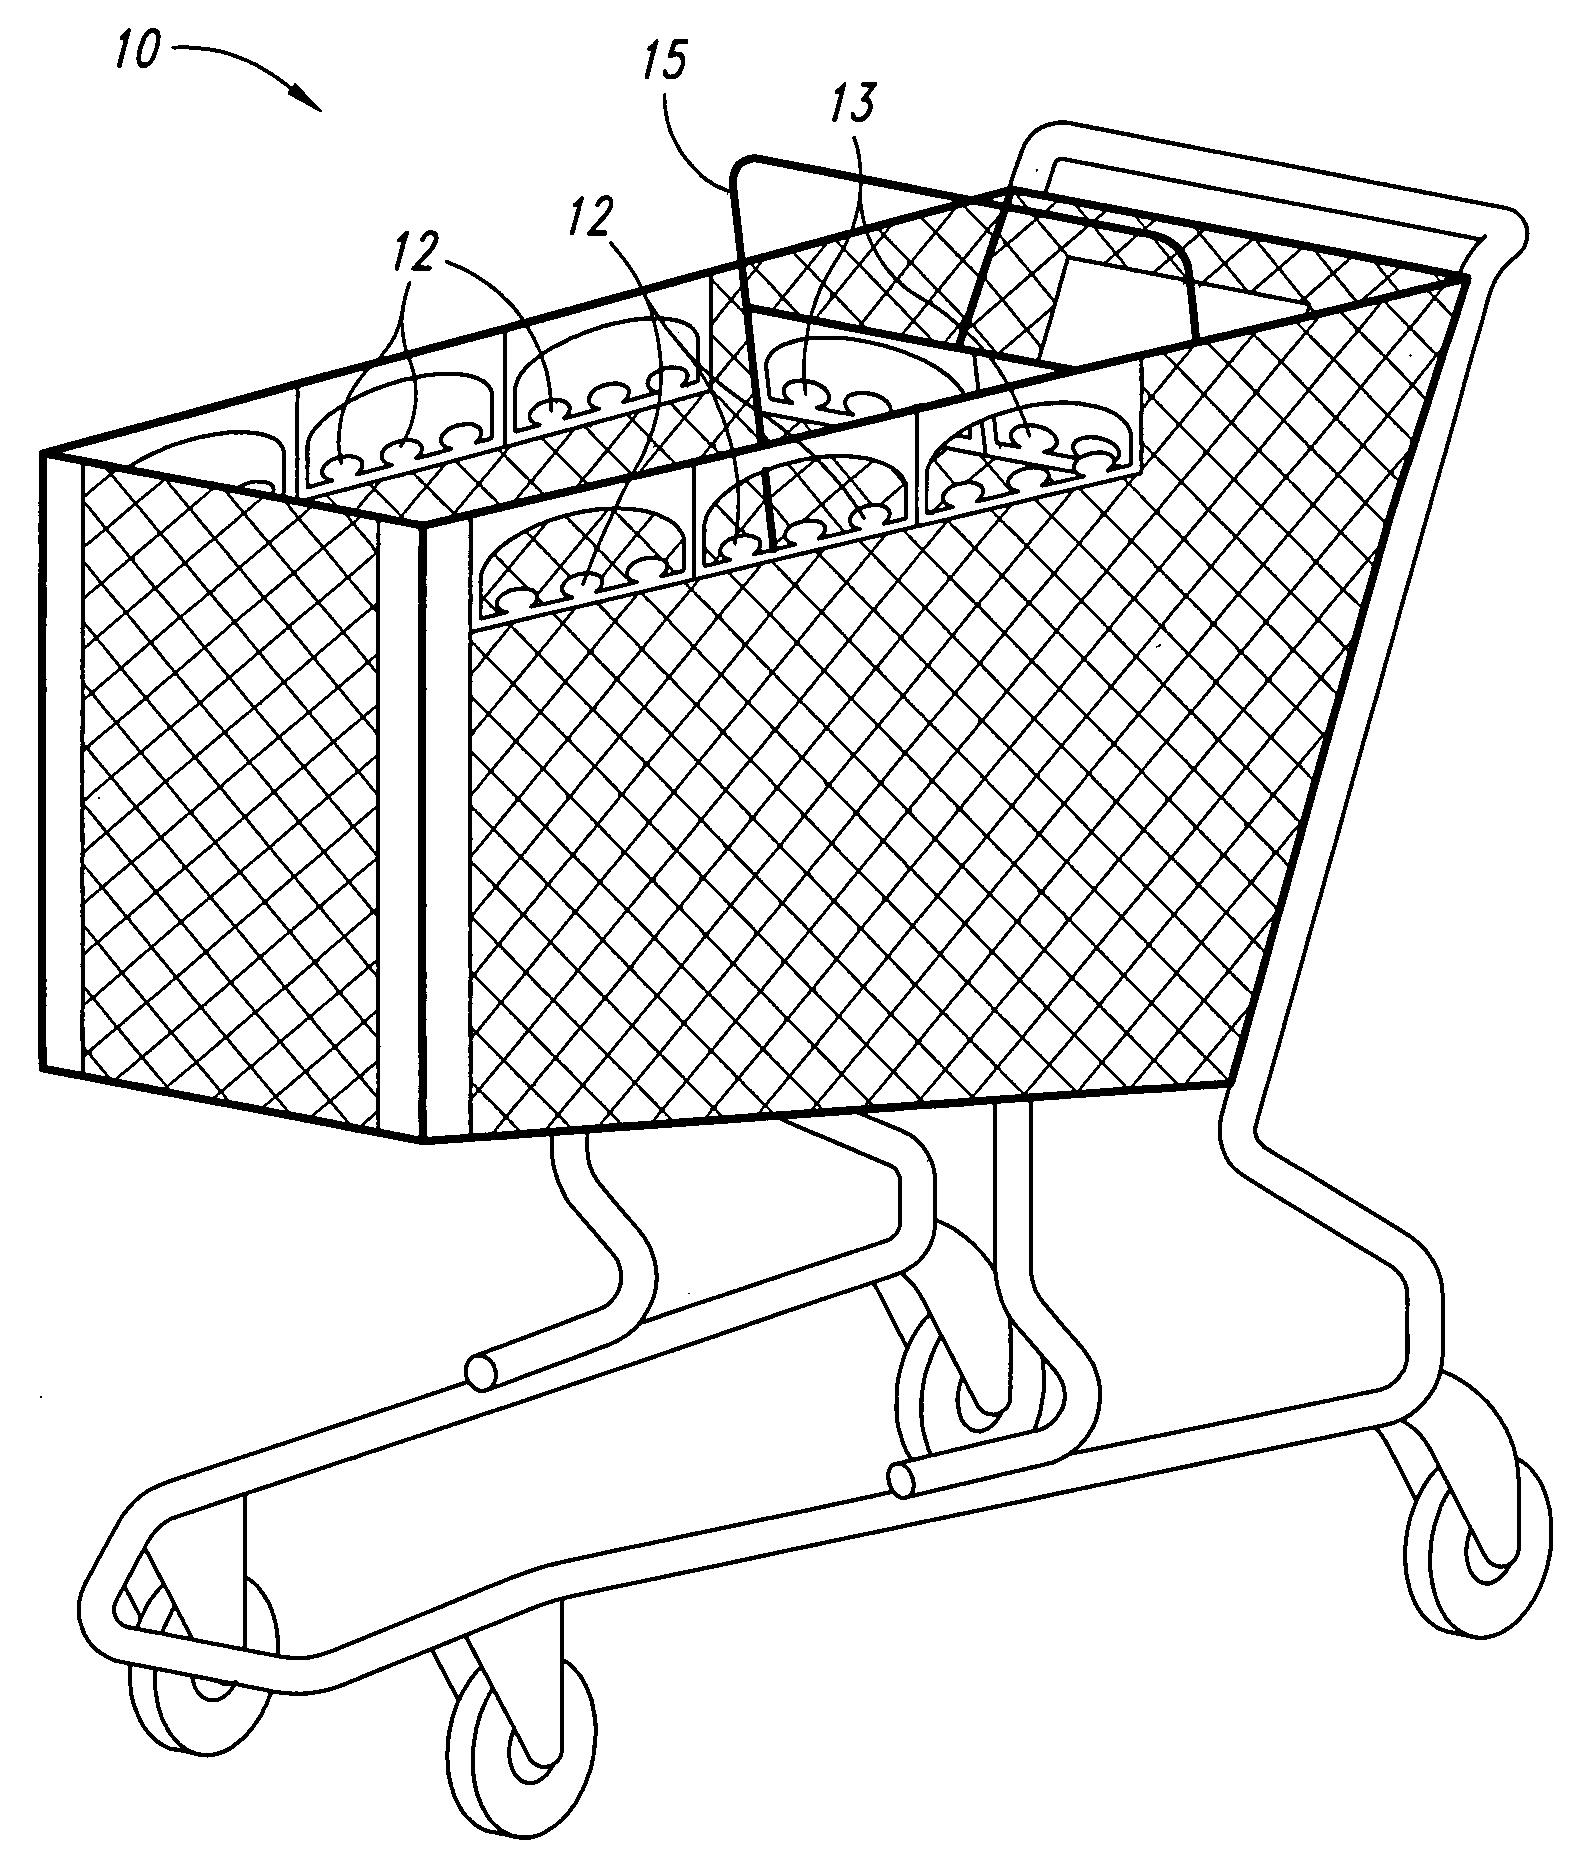 Mutually nestable shopping carts having bag hangers